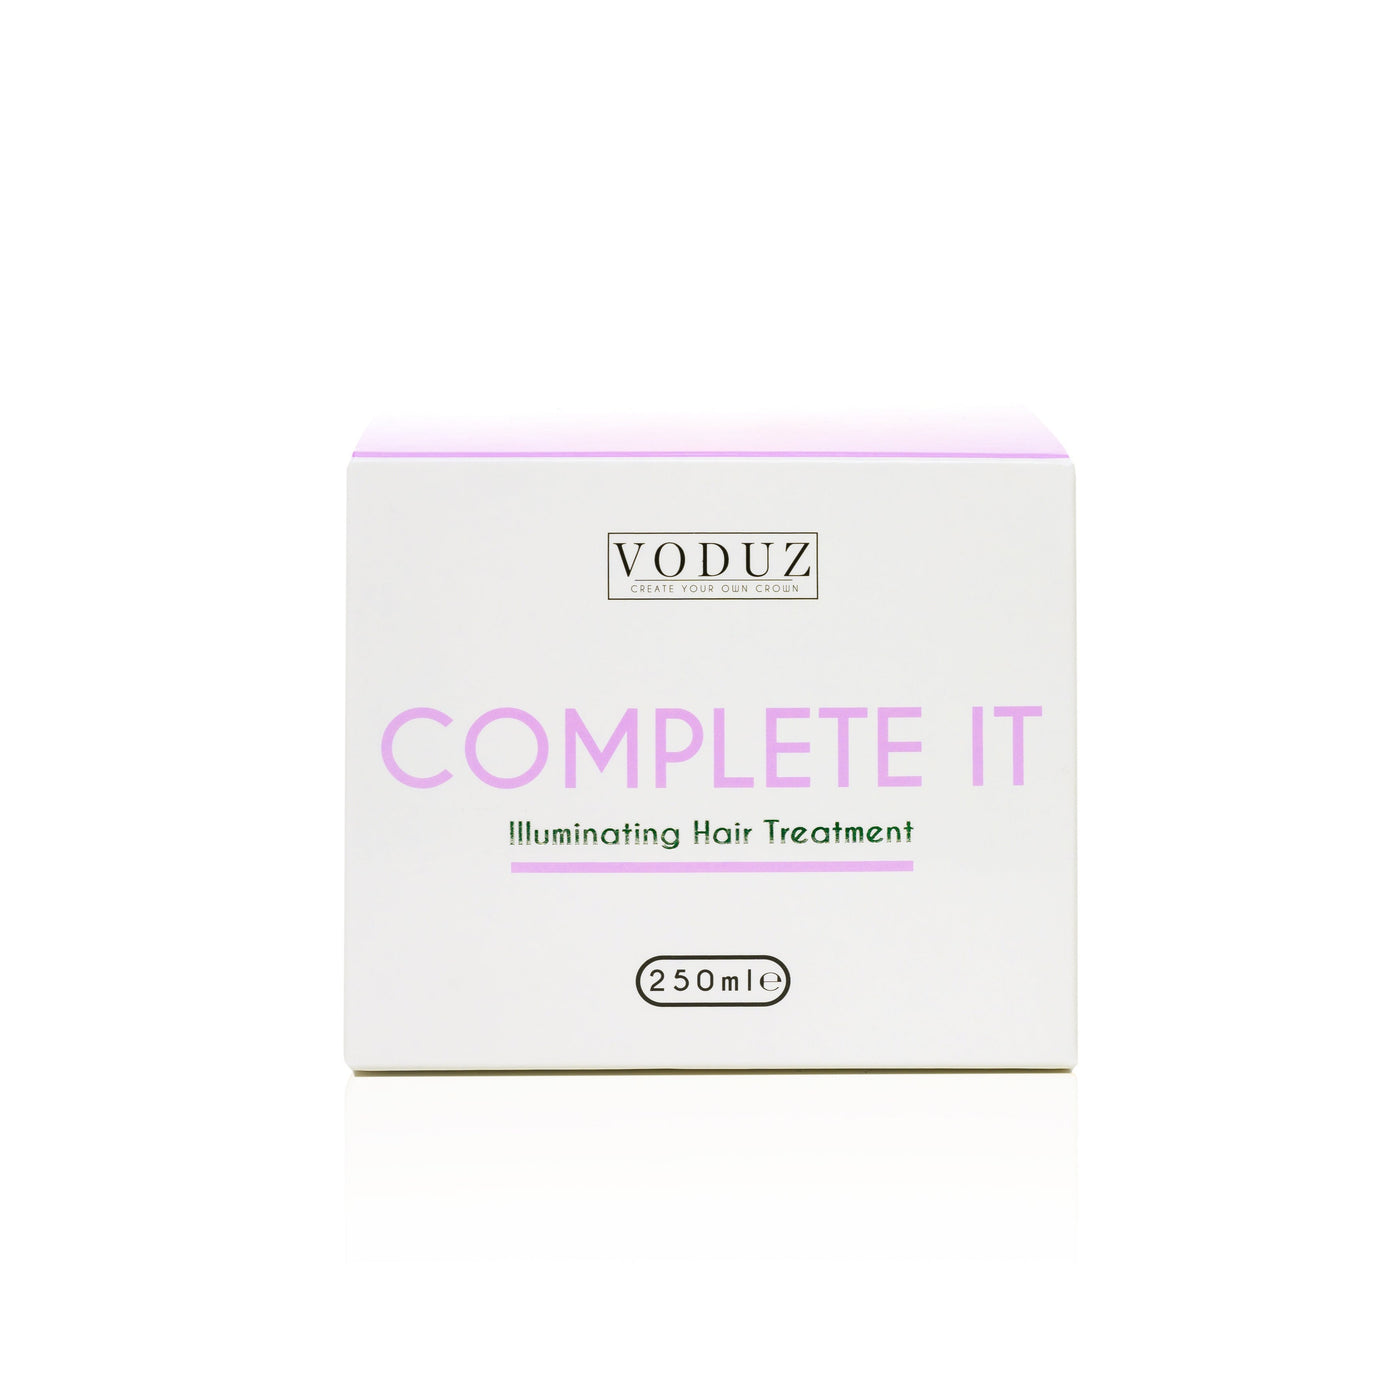 Voduz 'Complete It' Illuminating Hair Treatment 250ml